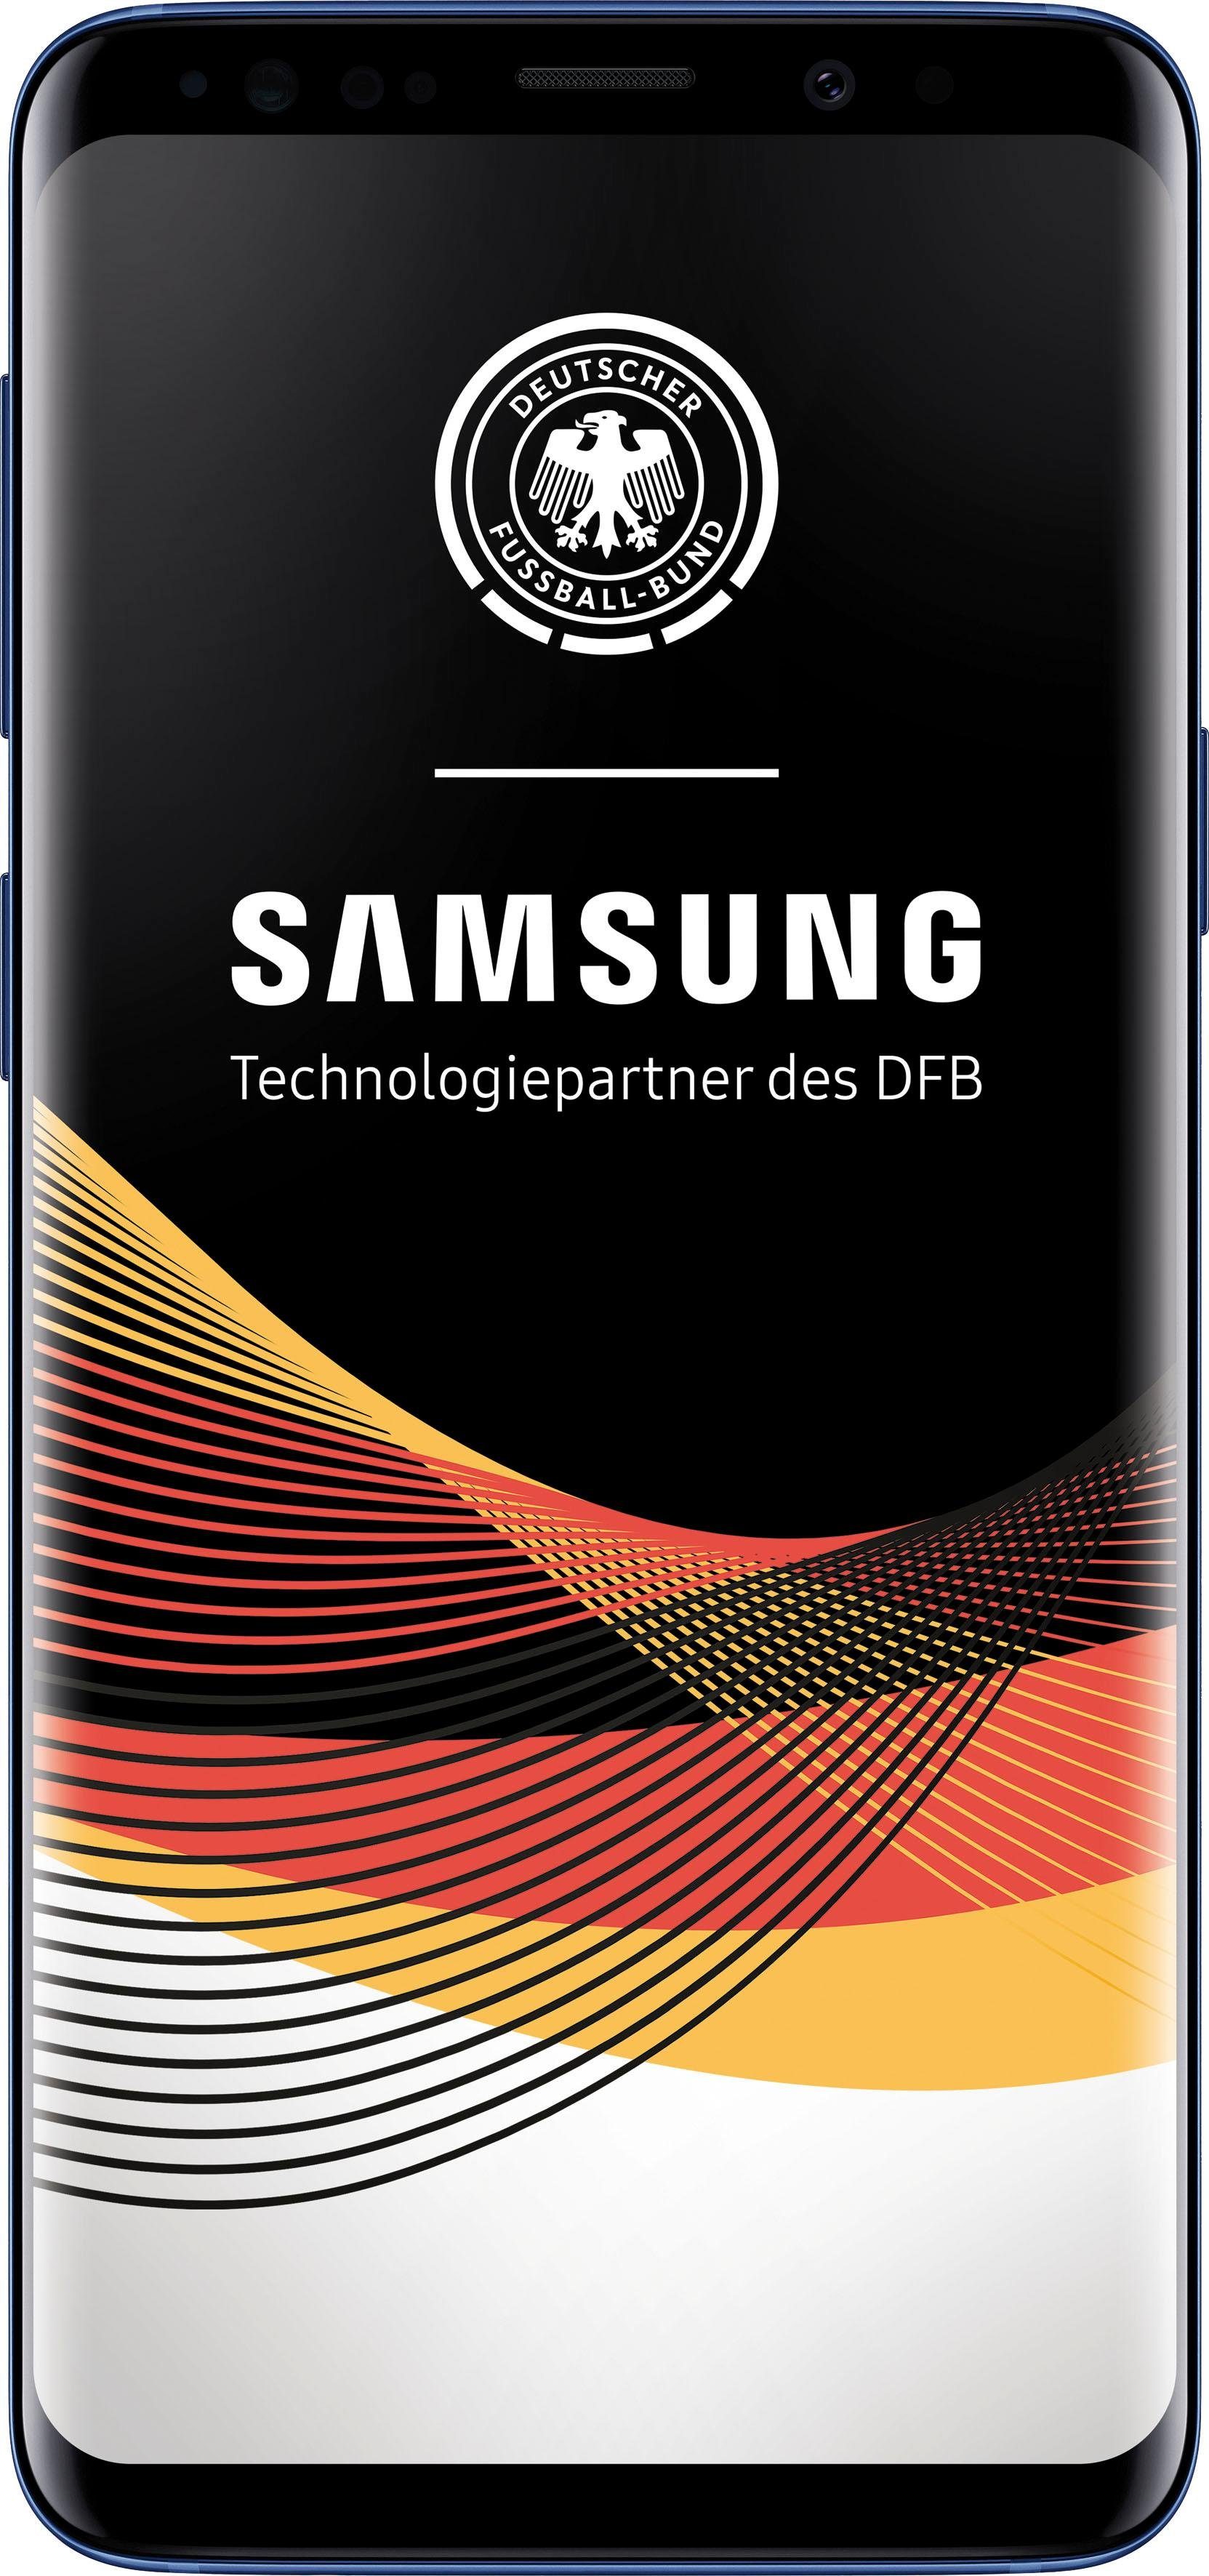 SAMSUNG Samsung Galaxy S9 dualsim-smartphone (14,65 cm / 5,77 inch, 64 GB, 12MP-camera)